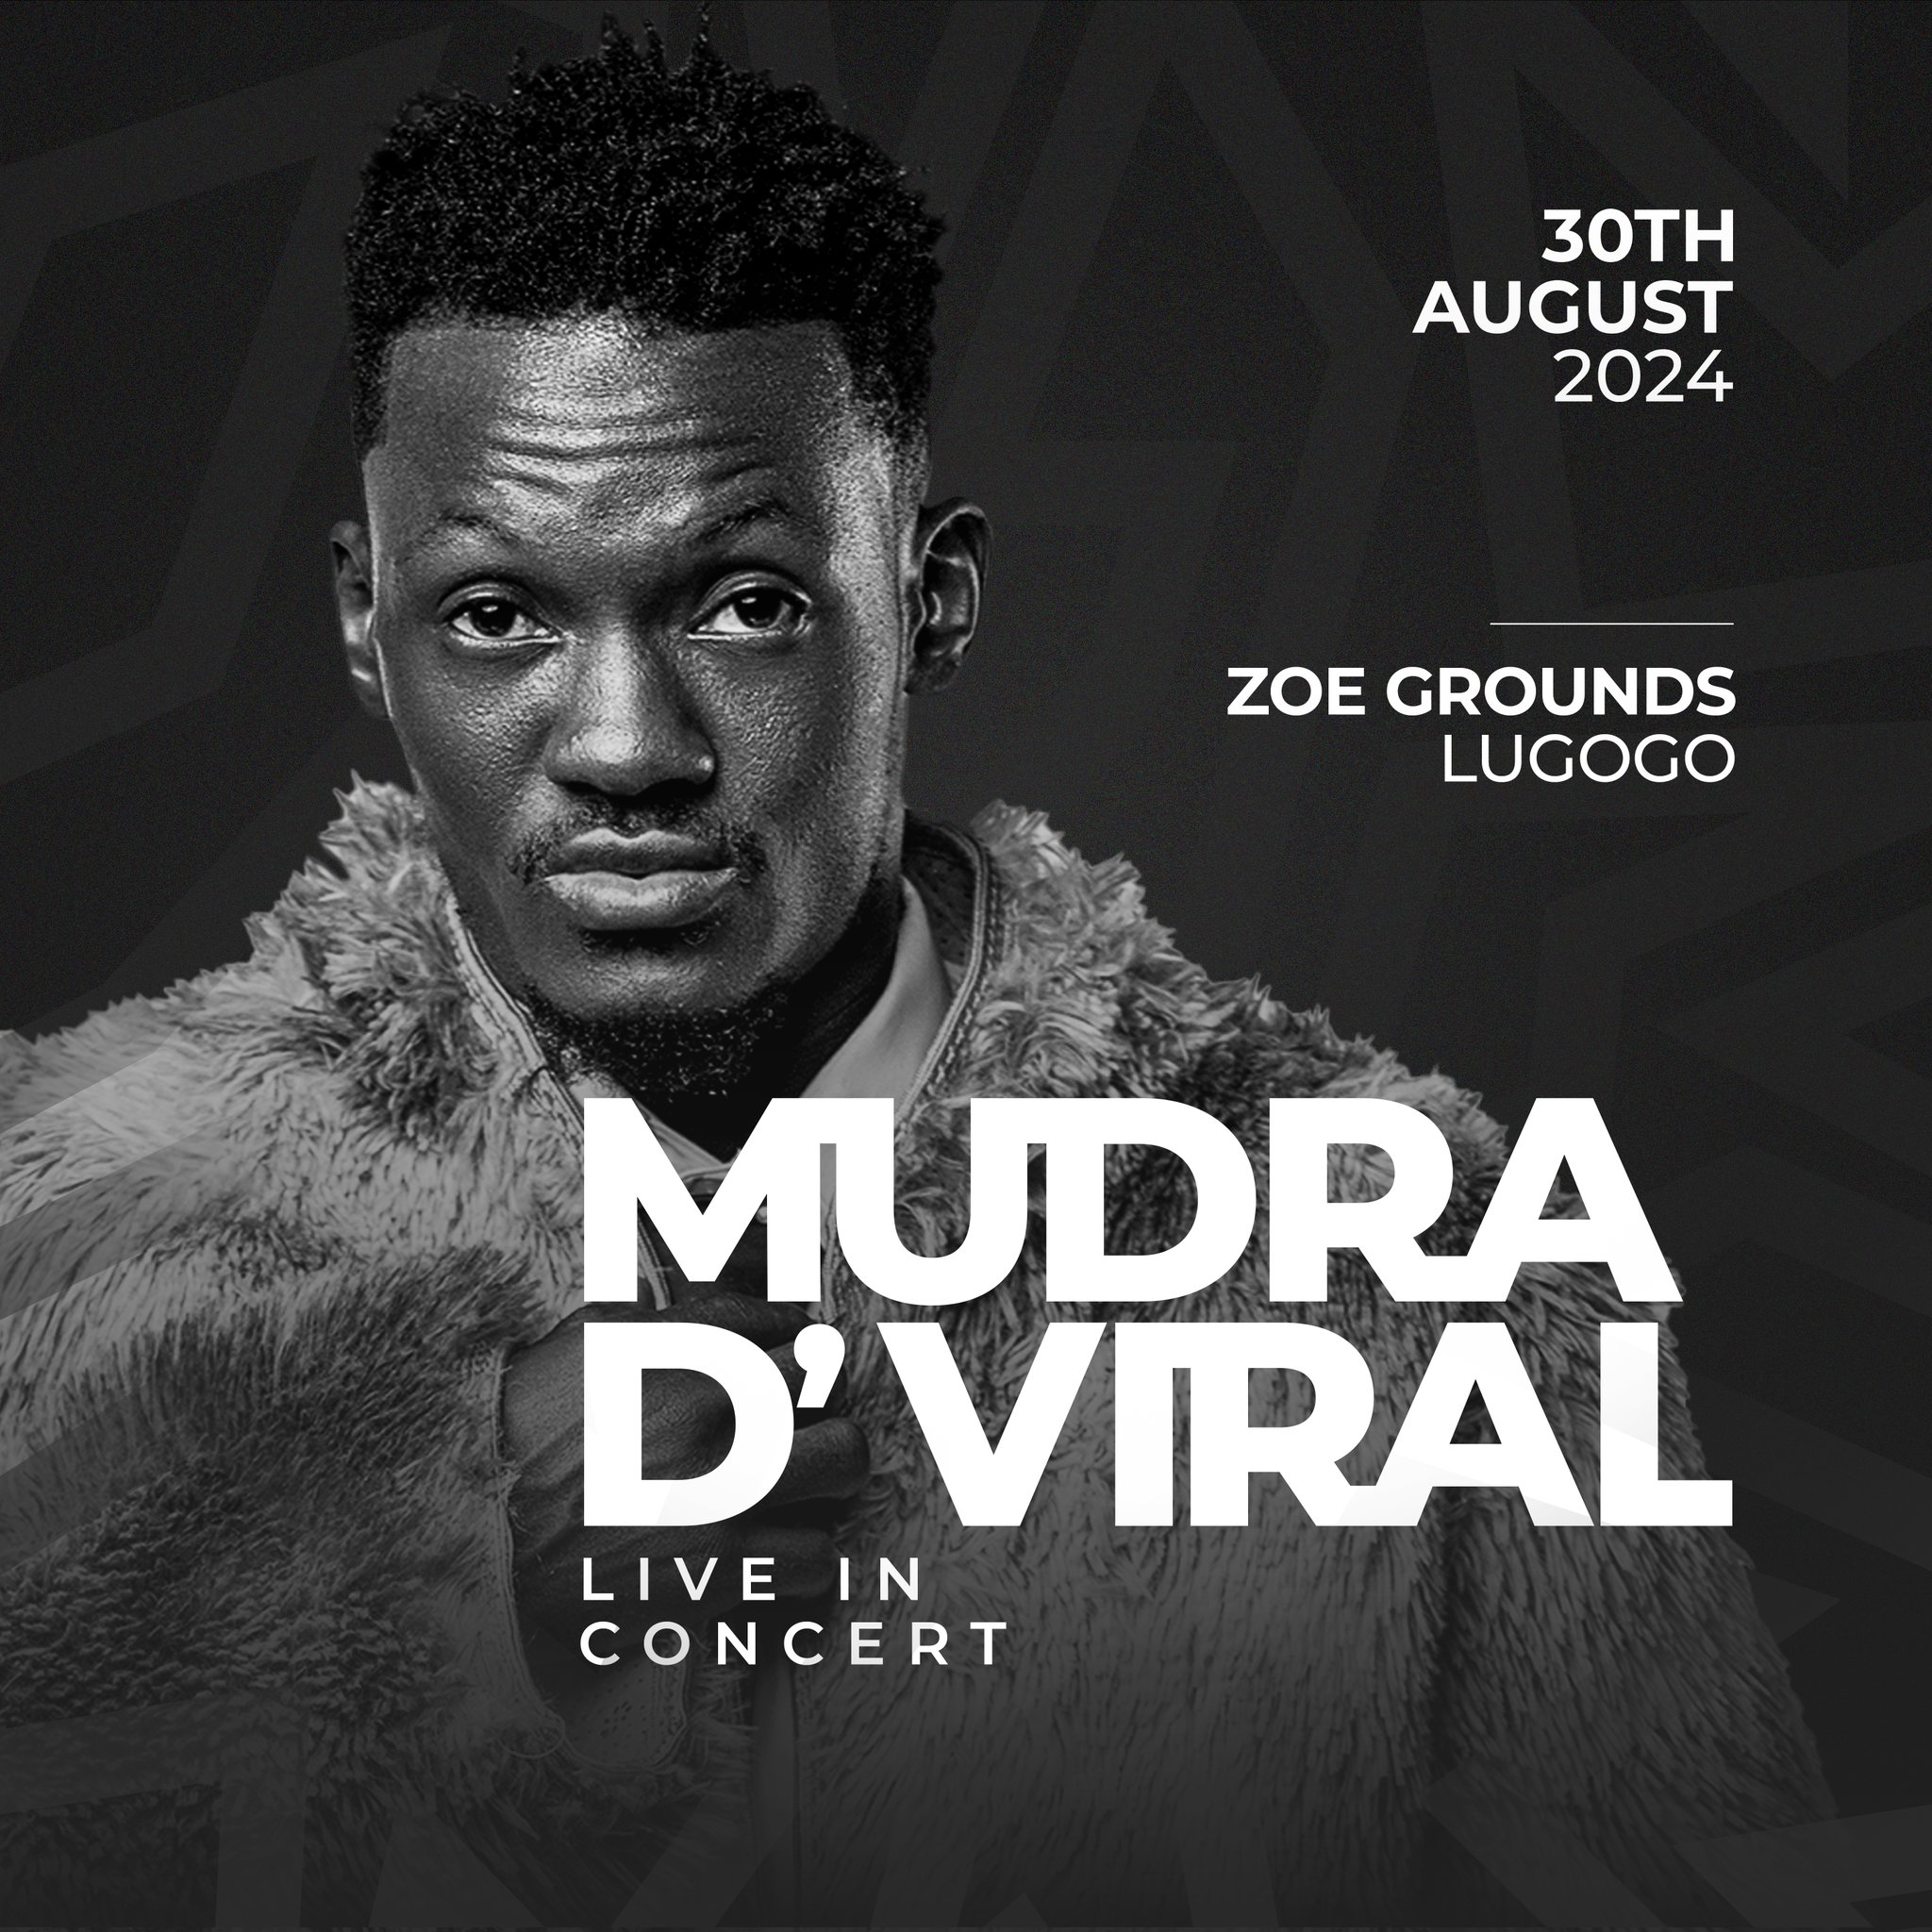 Mudra D’ Viral Reveals Maiden Concert Dates and Venue